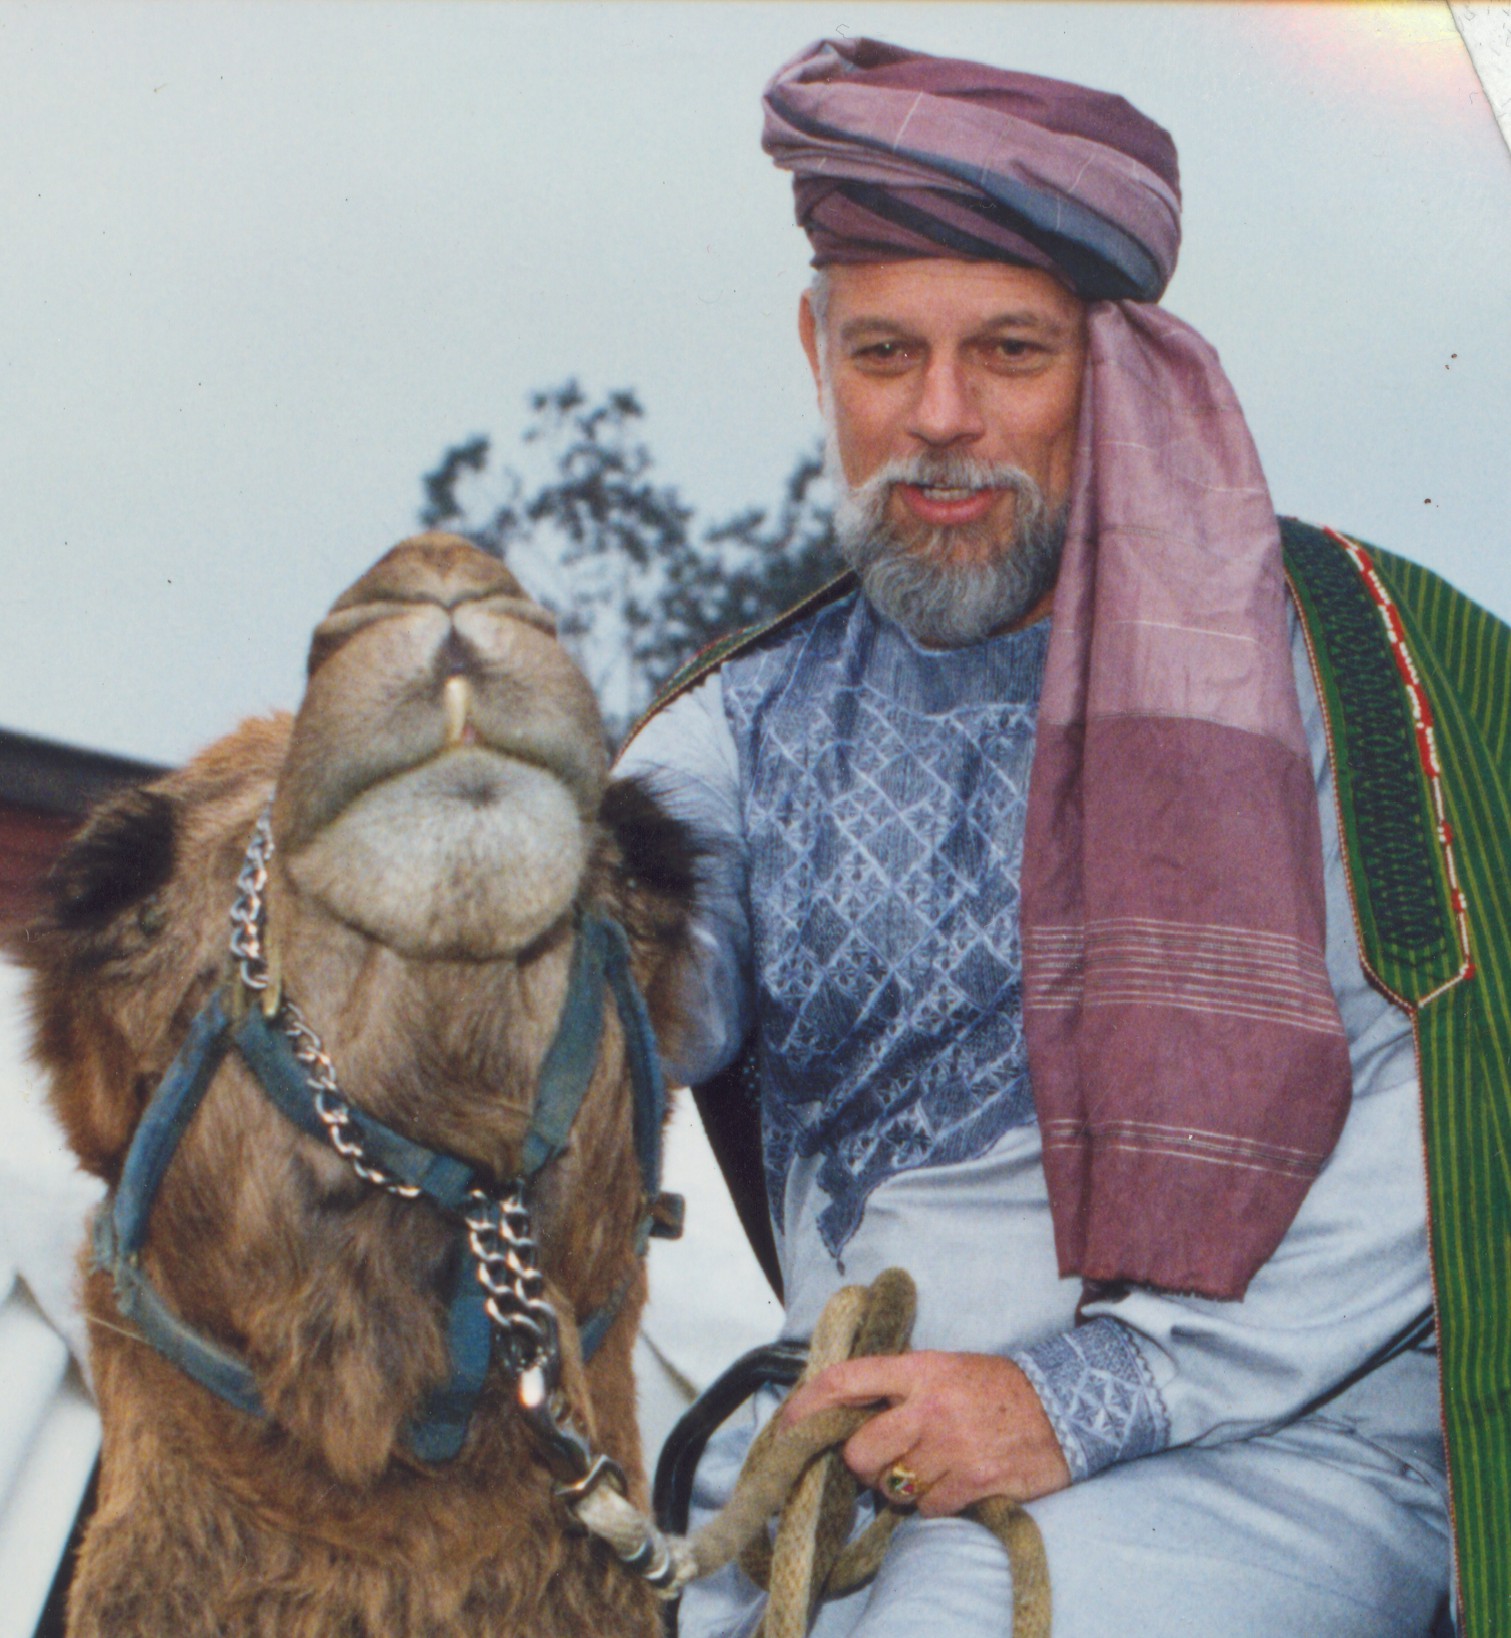 Rochester, Minnesota – Gary Bowersox rides a camel to promote a gem show.